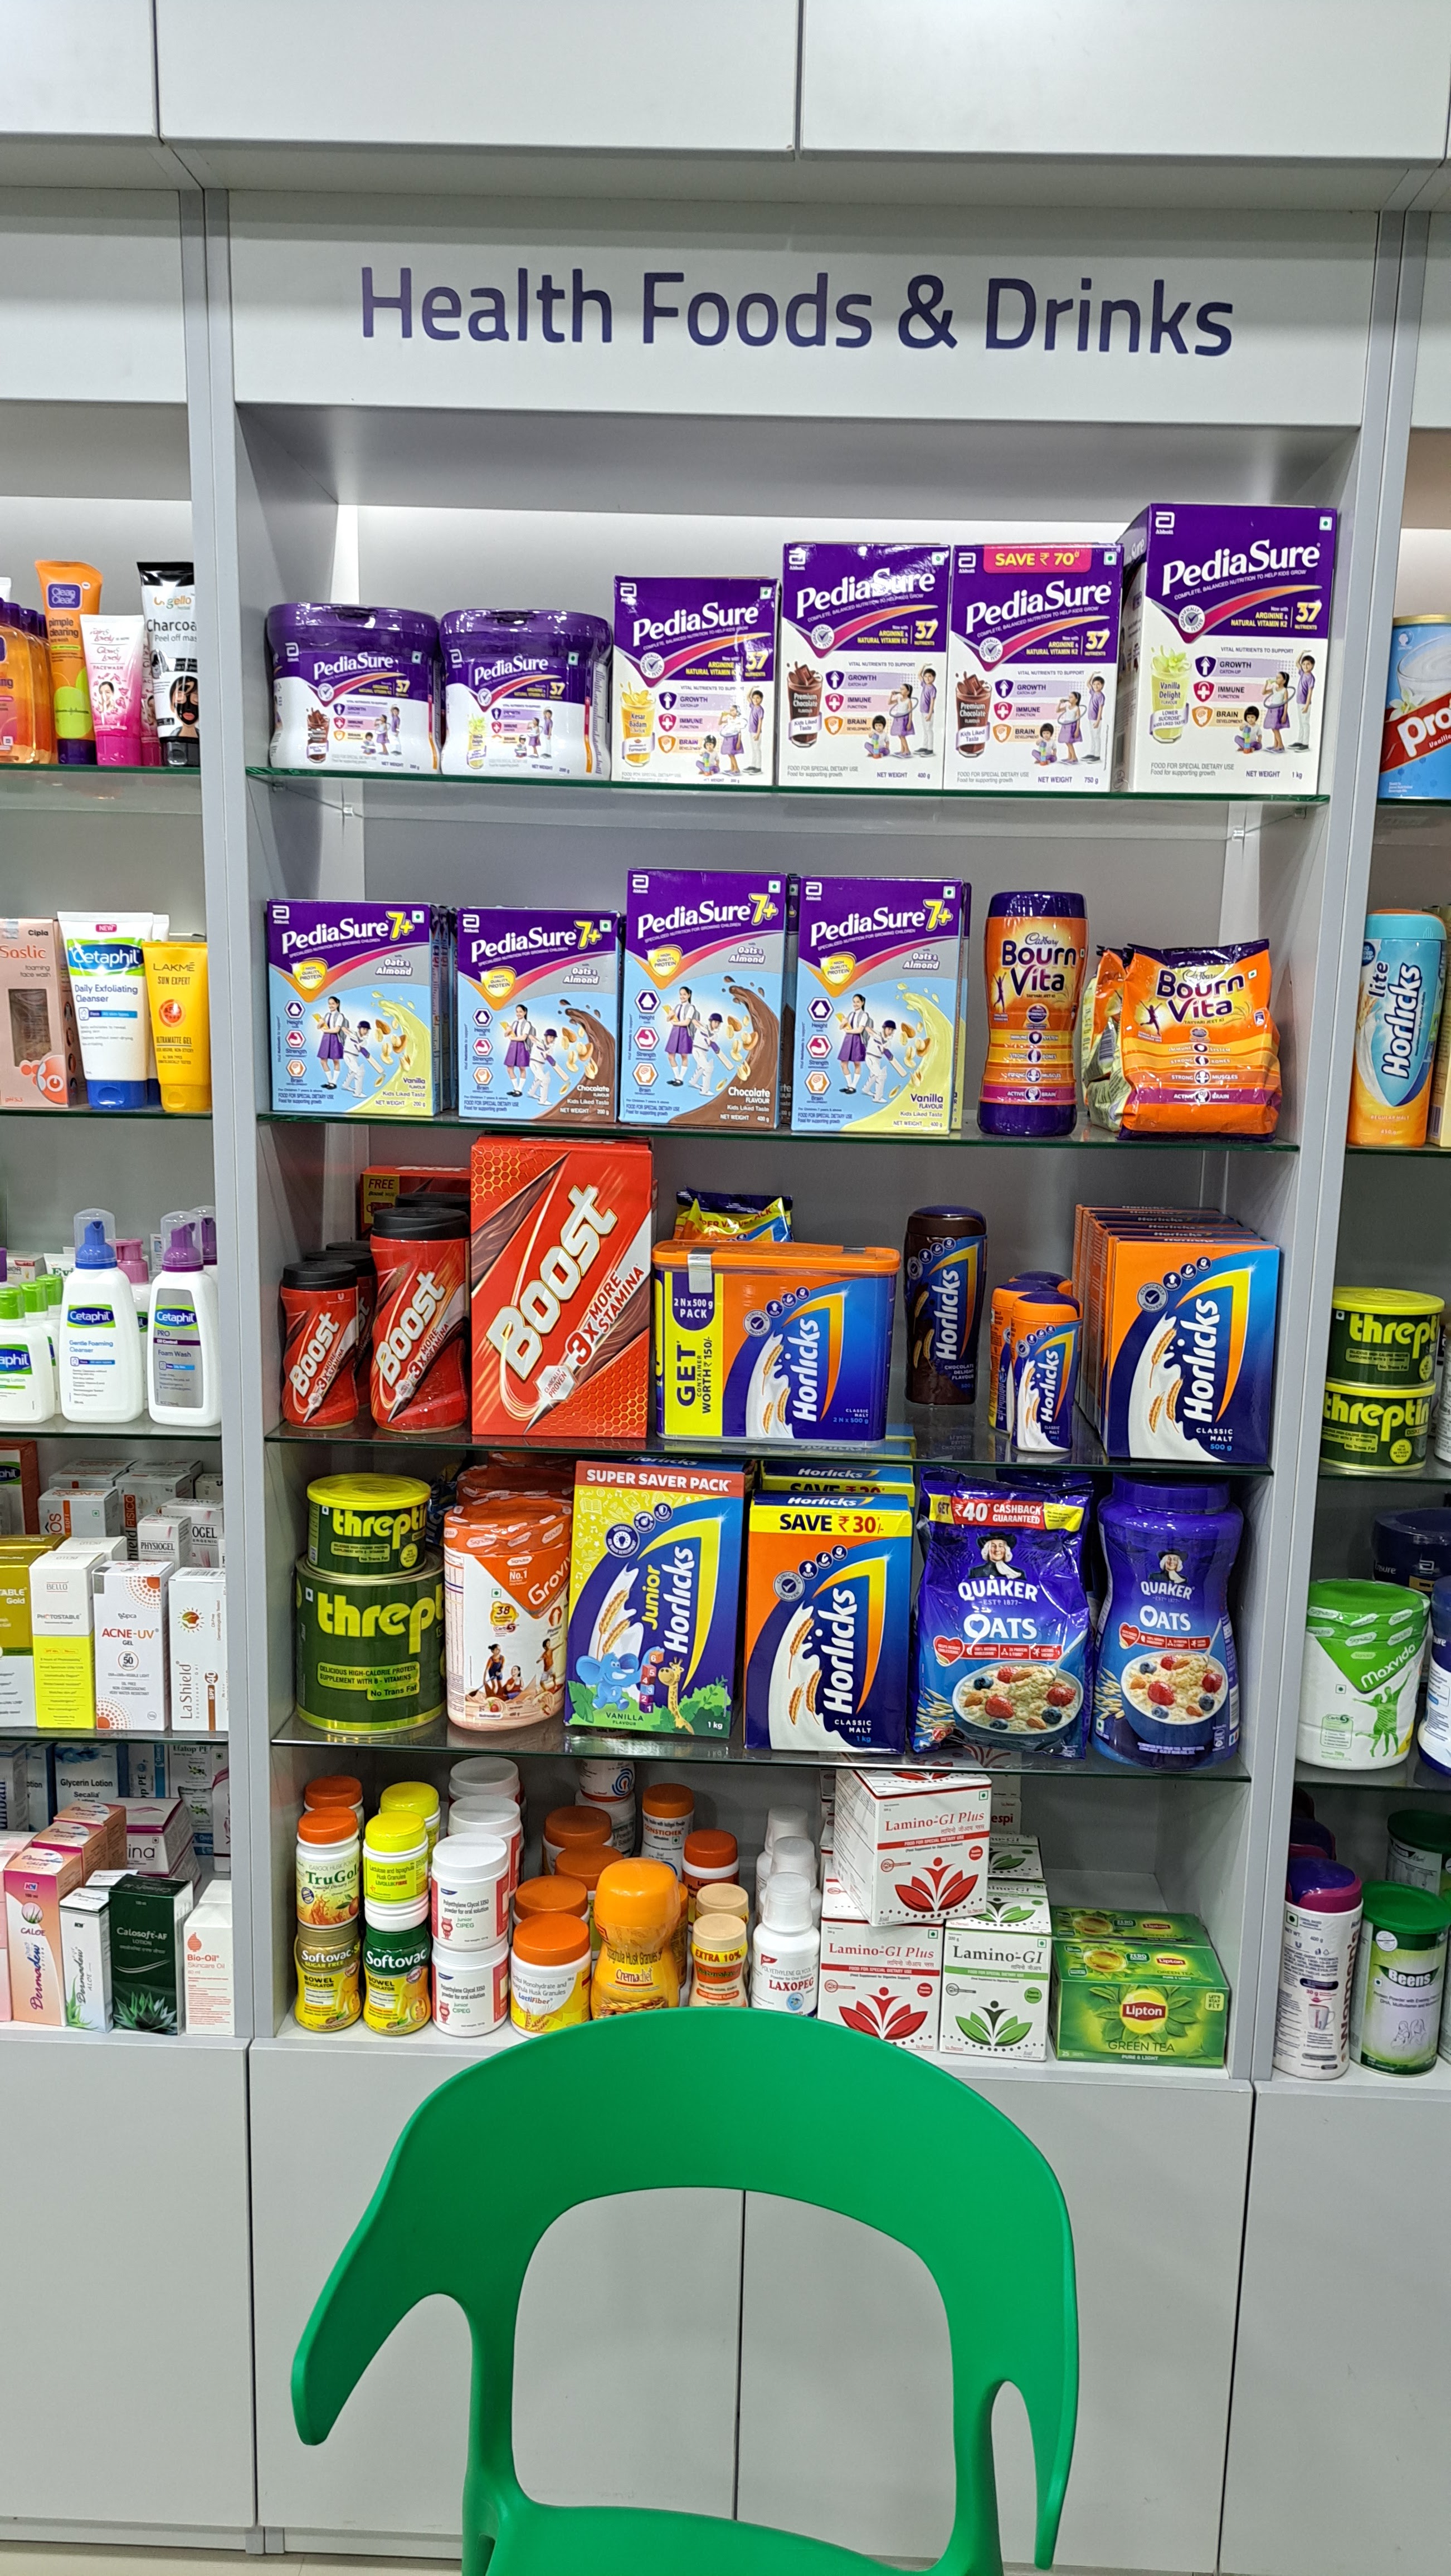 Aster Pharmacy in Kadavanthra, Kochi